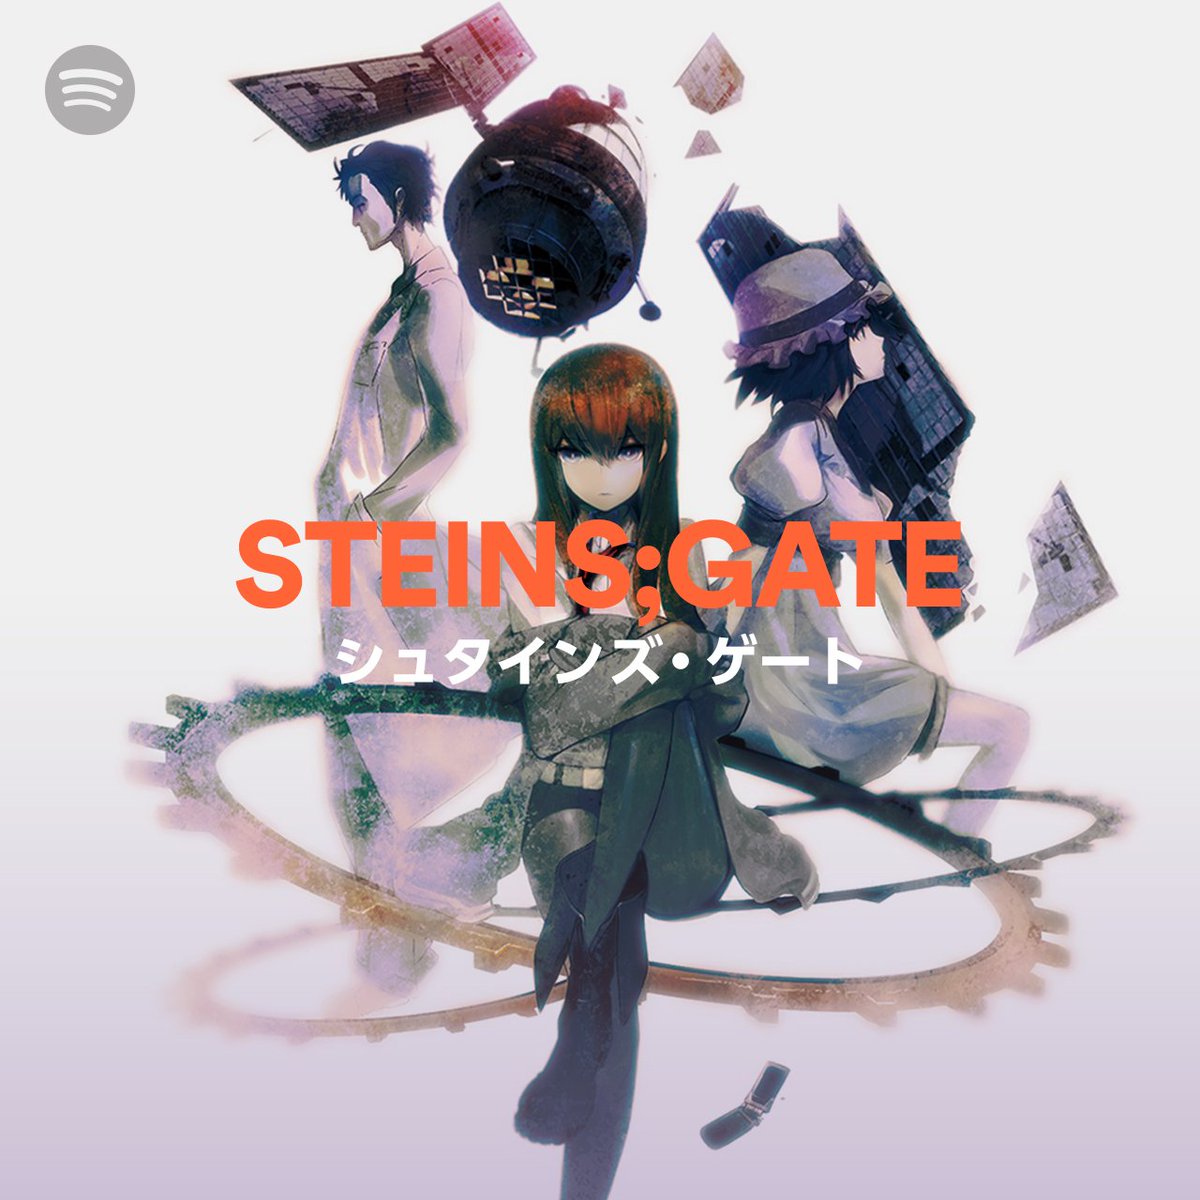 Spotify Japan Twitterren Steins Gate シュタインズ ゲート Sg Anime 公式プレイリストを公開 いとうかなこ Info Kanako Ito が歌う シュタゲゼロ の主題歌 ファティマ からスタート 音楽と共に シュタゲ の世界へ T Co Dl7kfsywat